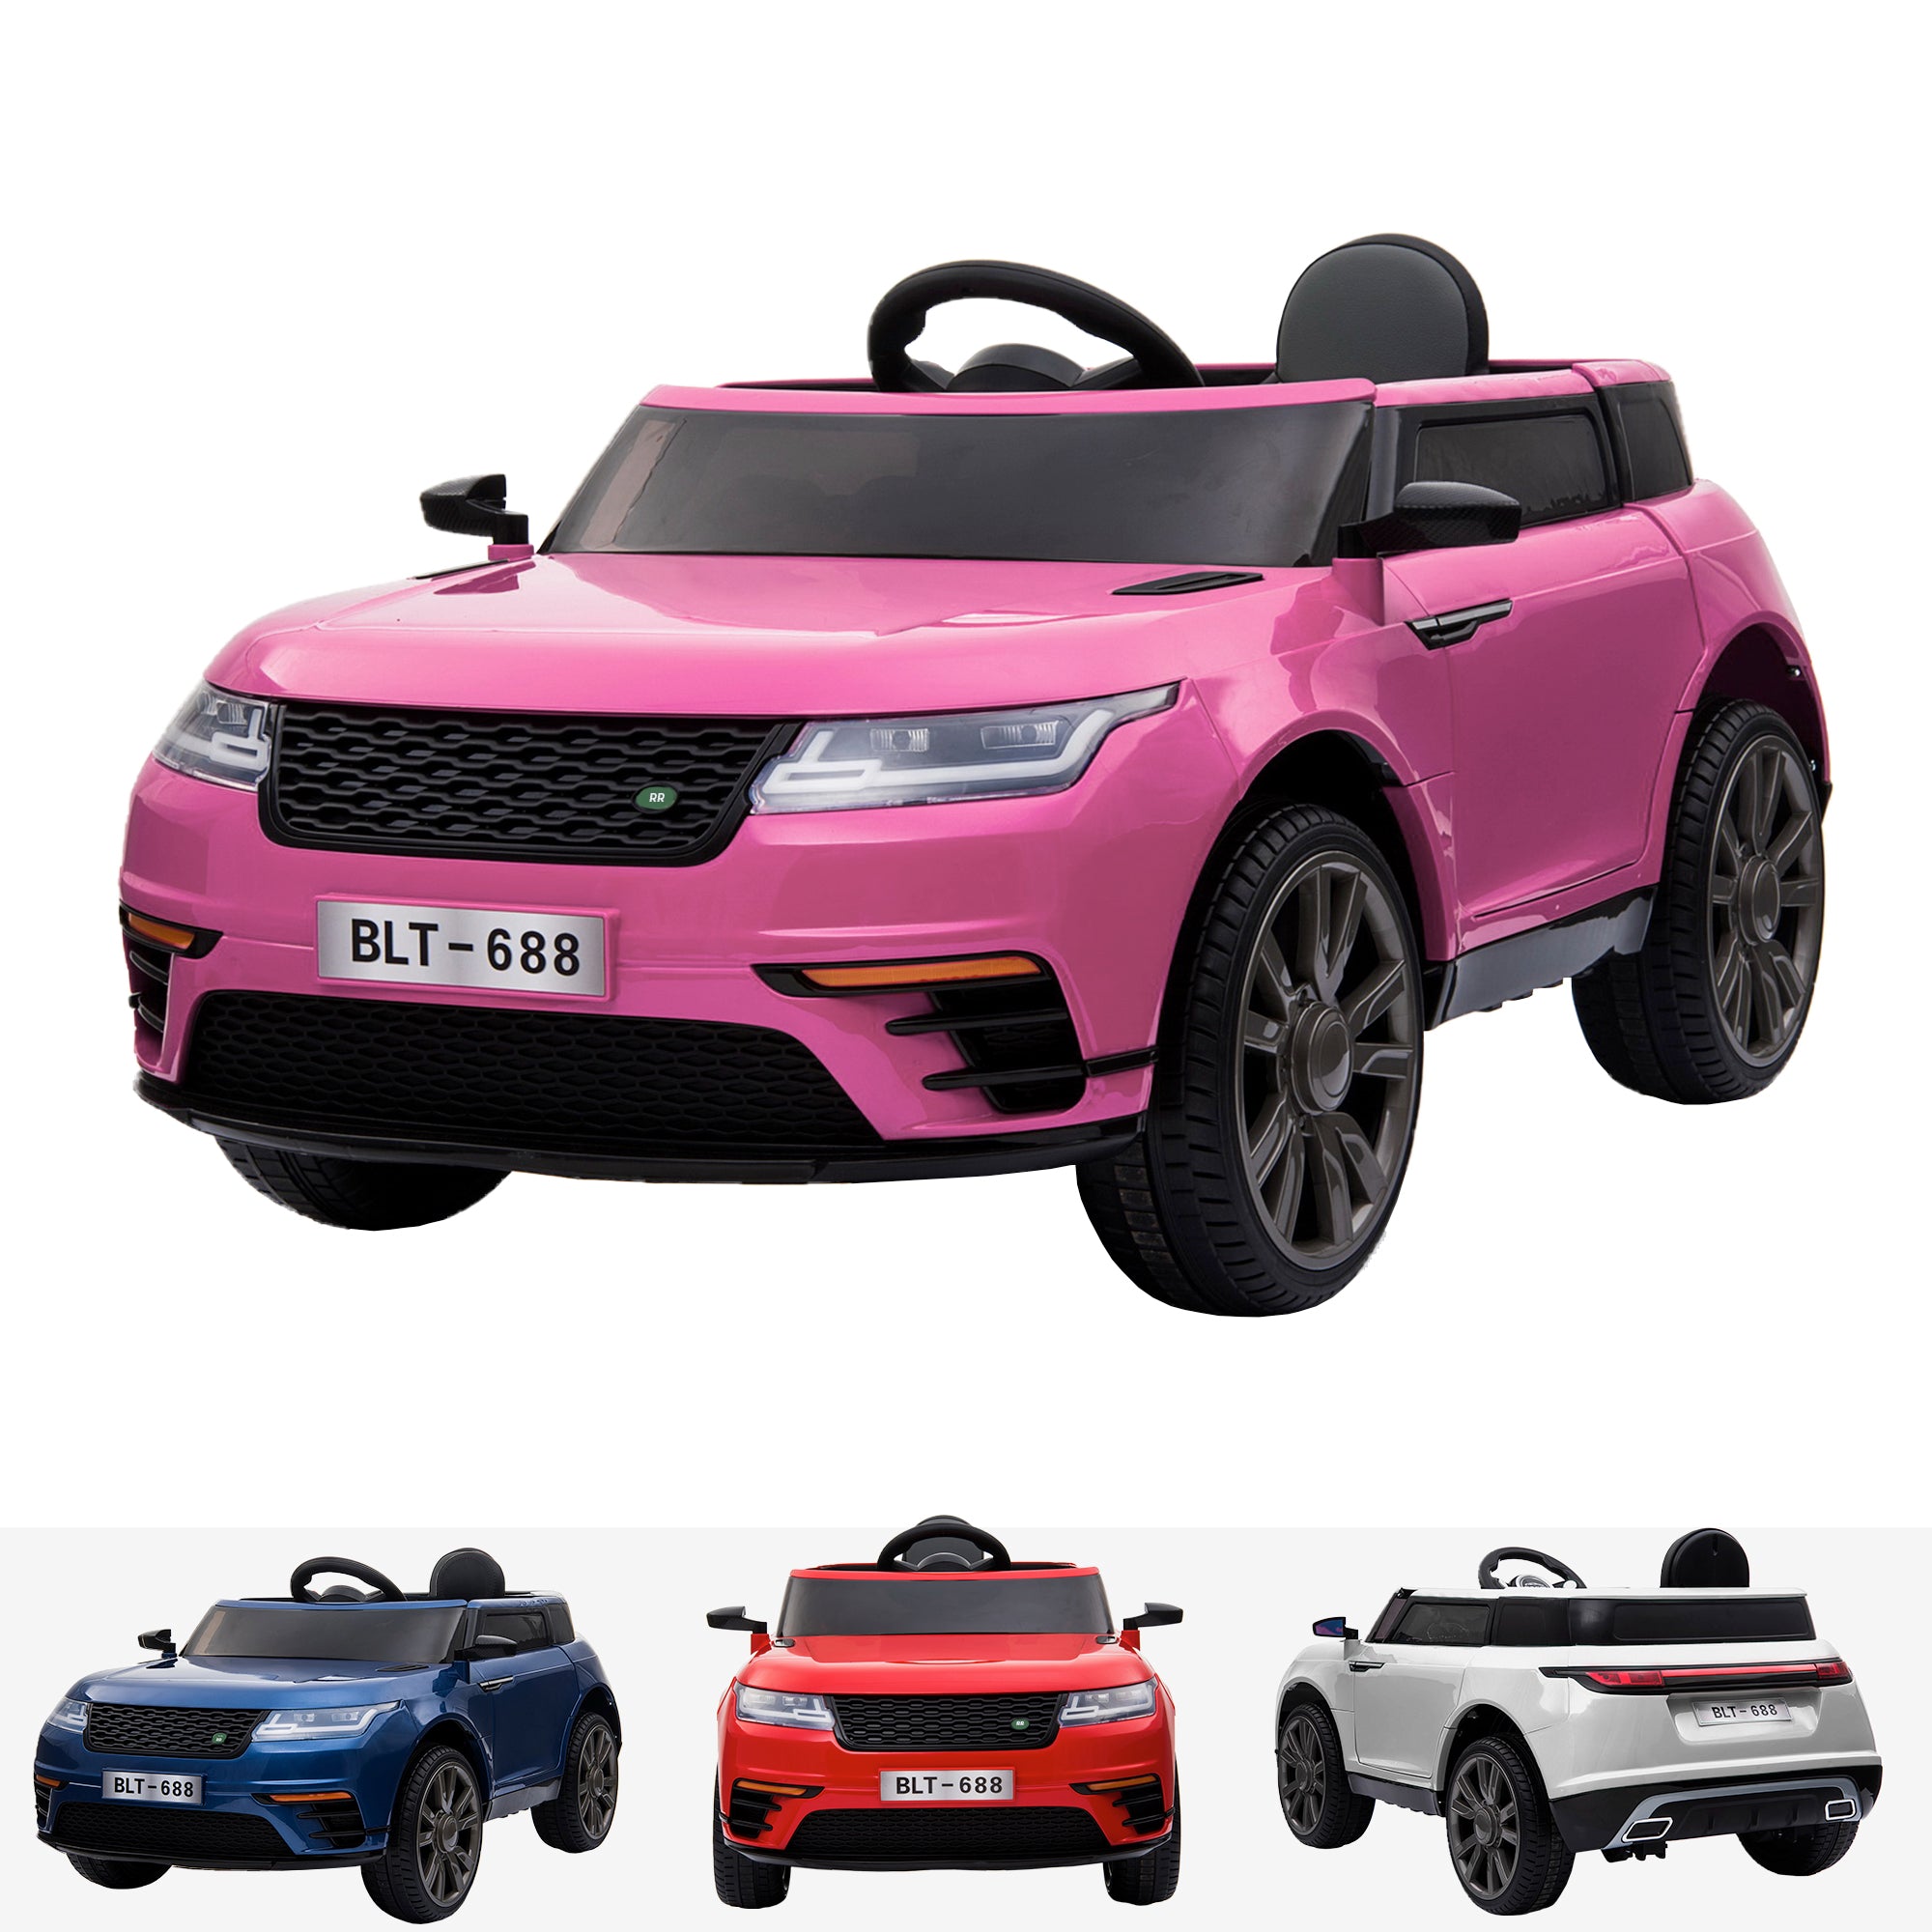 children's range rover electric car